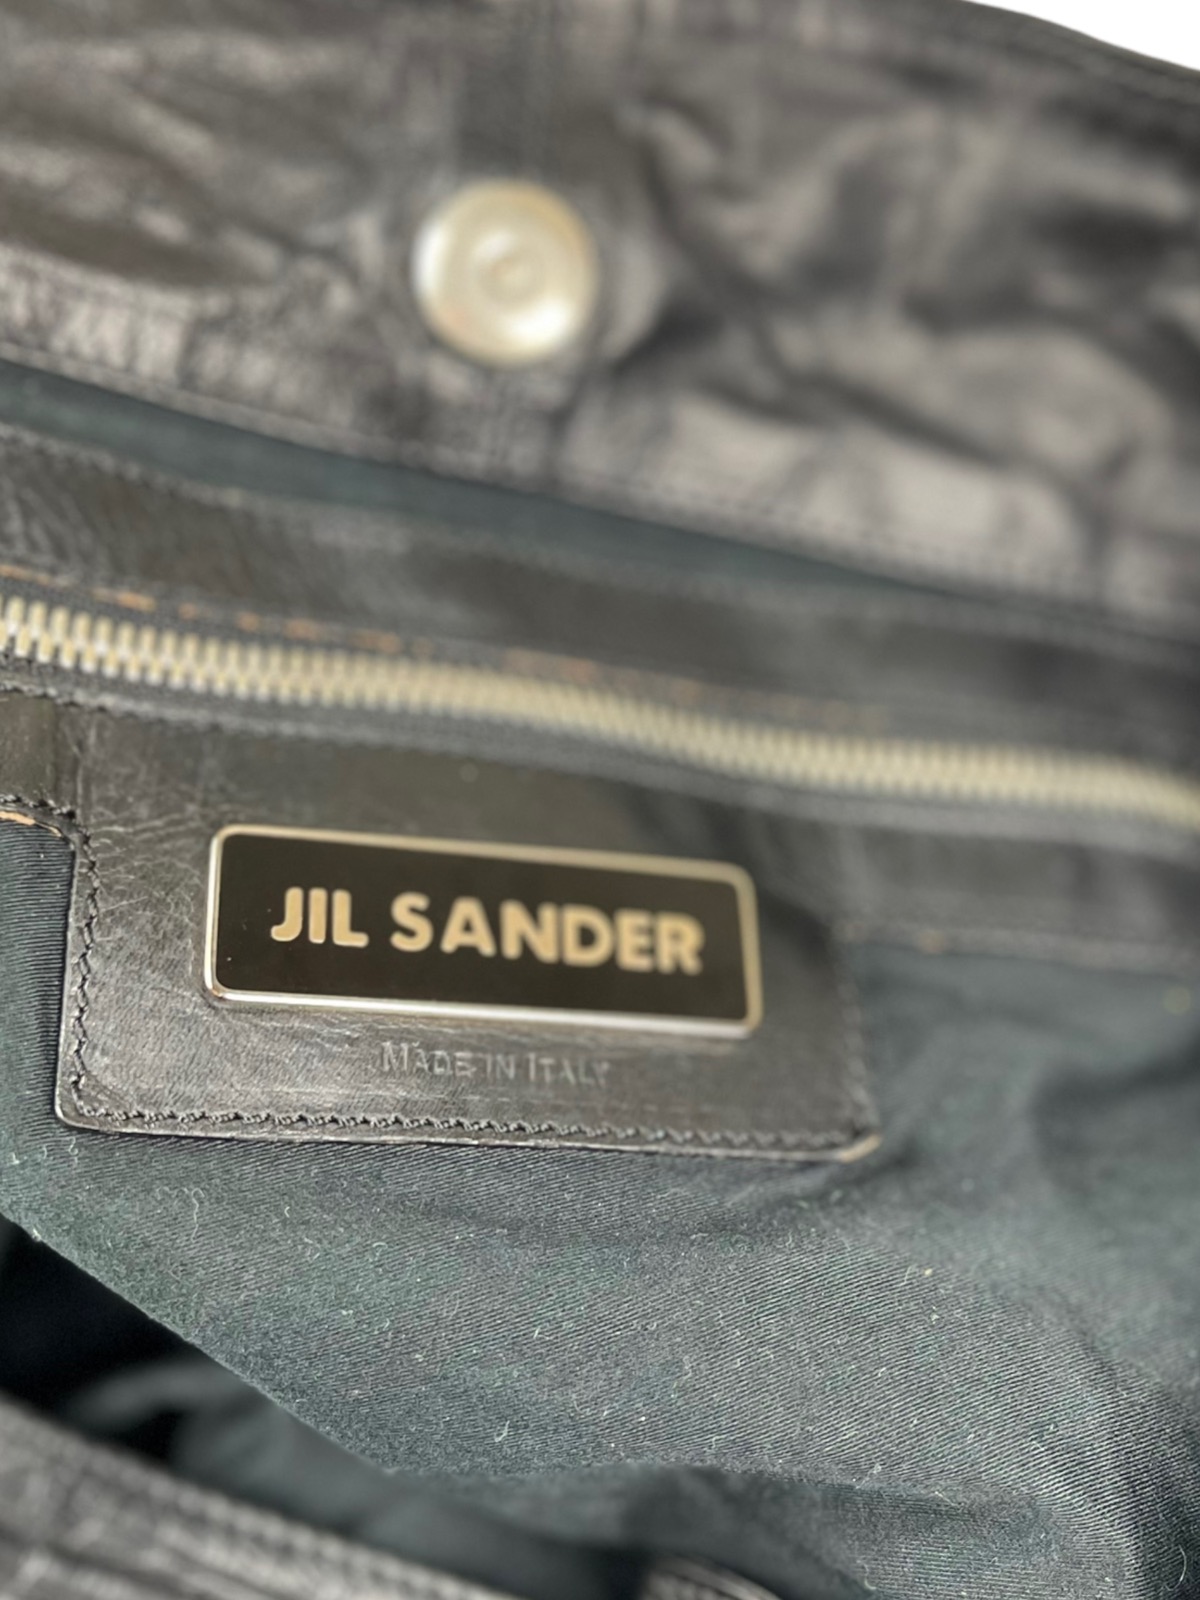 Jil Sander Hobo Leather Bag Bottom Woven - 14